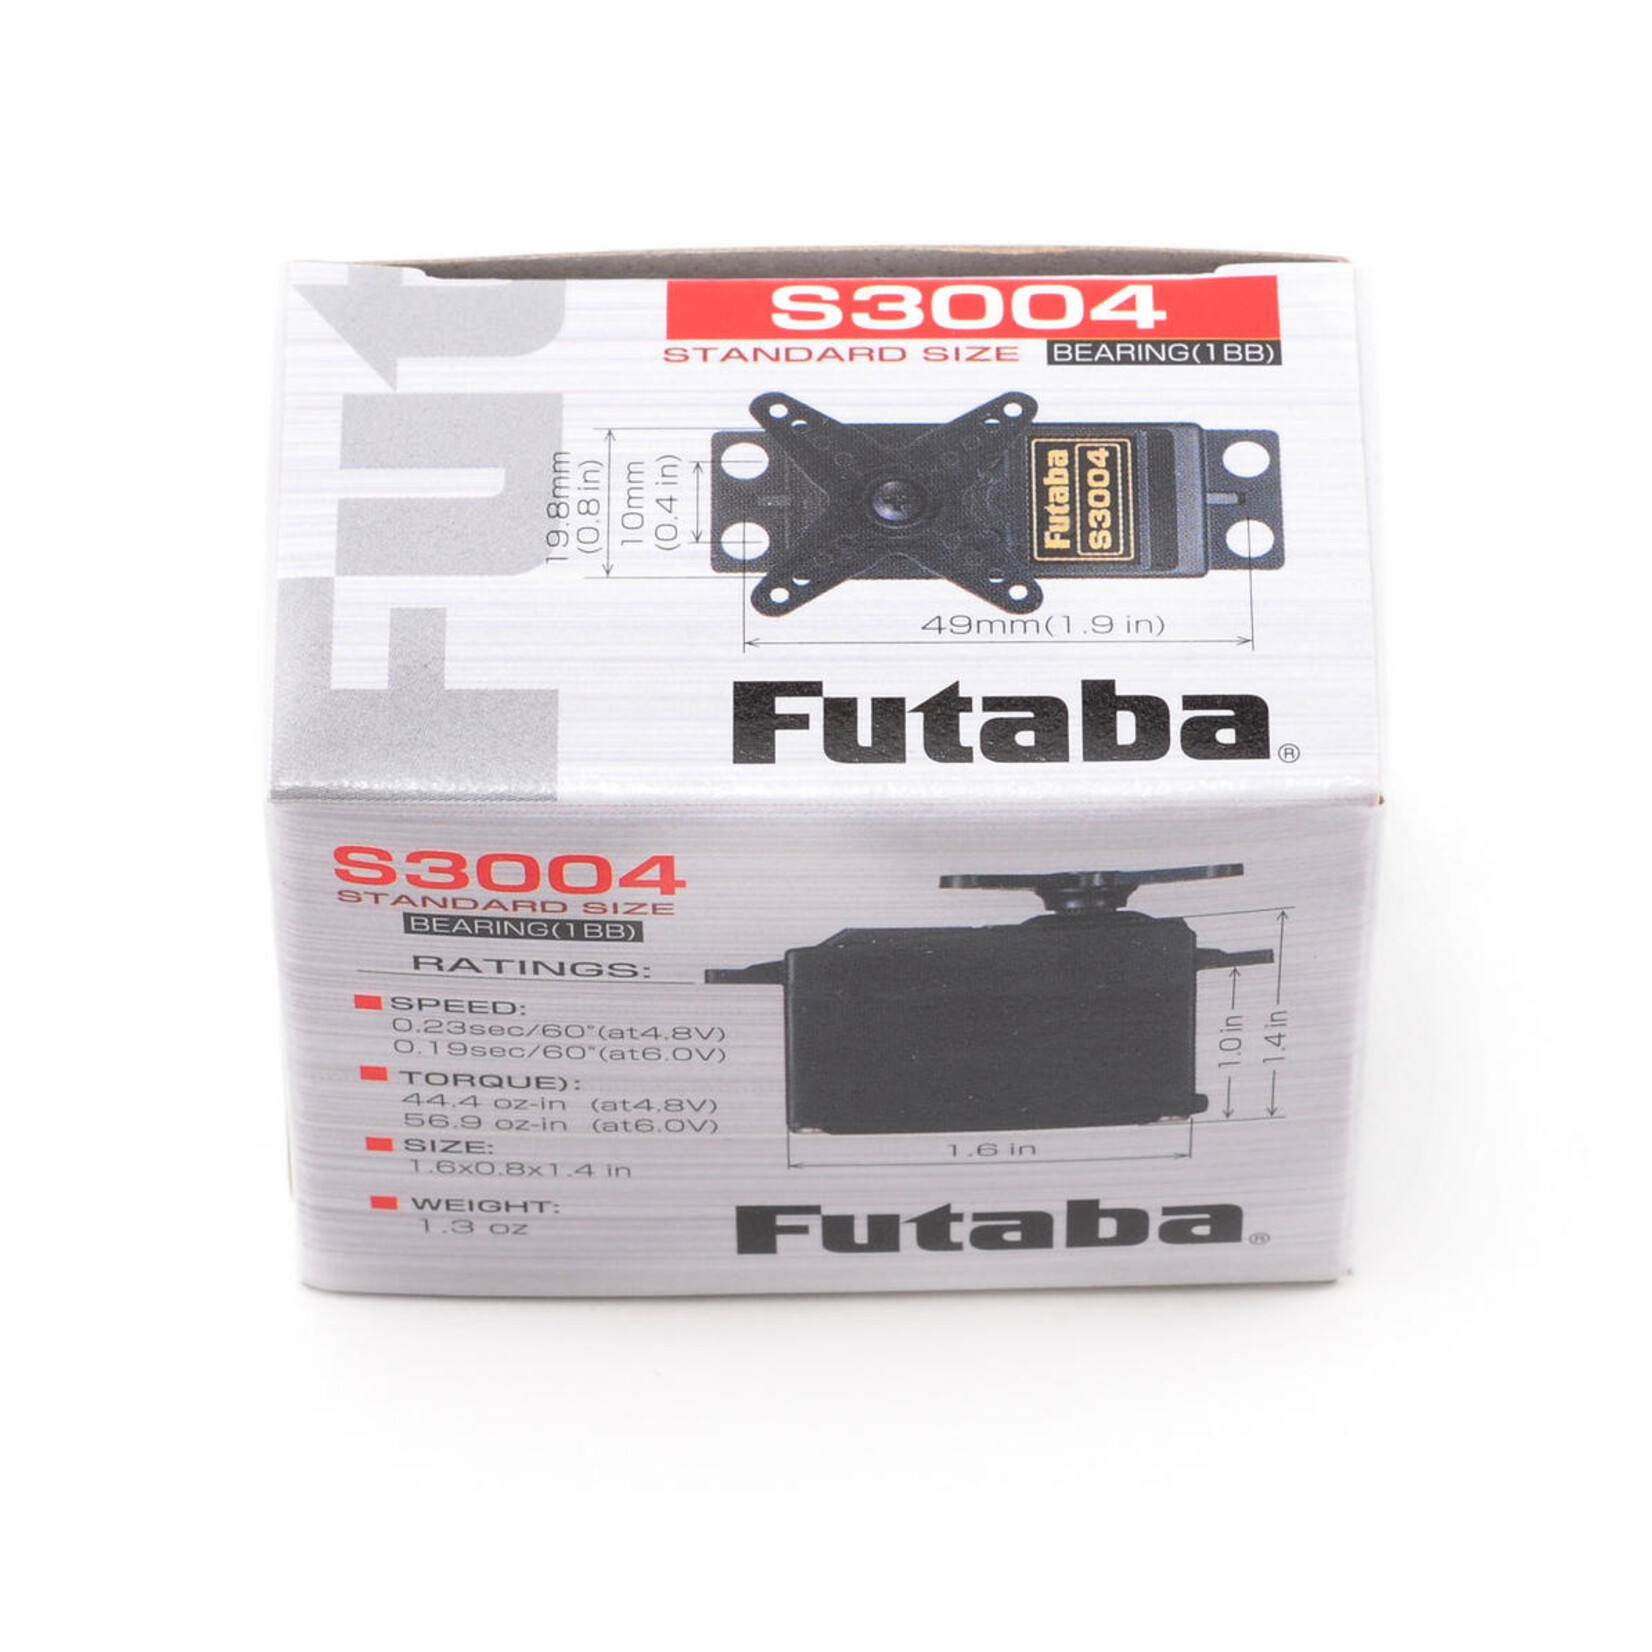 Futaba Futaba S3004 Standard Light Weight Ball Bearing Servo #01102163-1